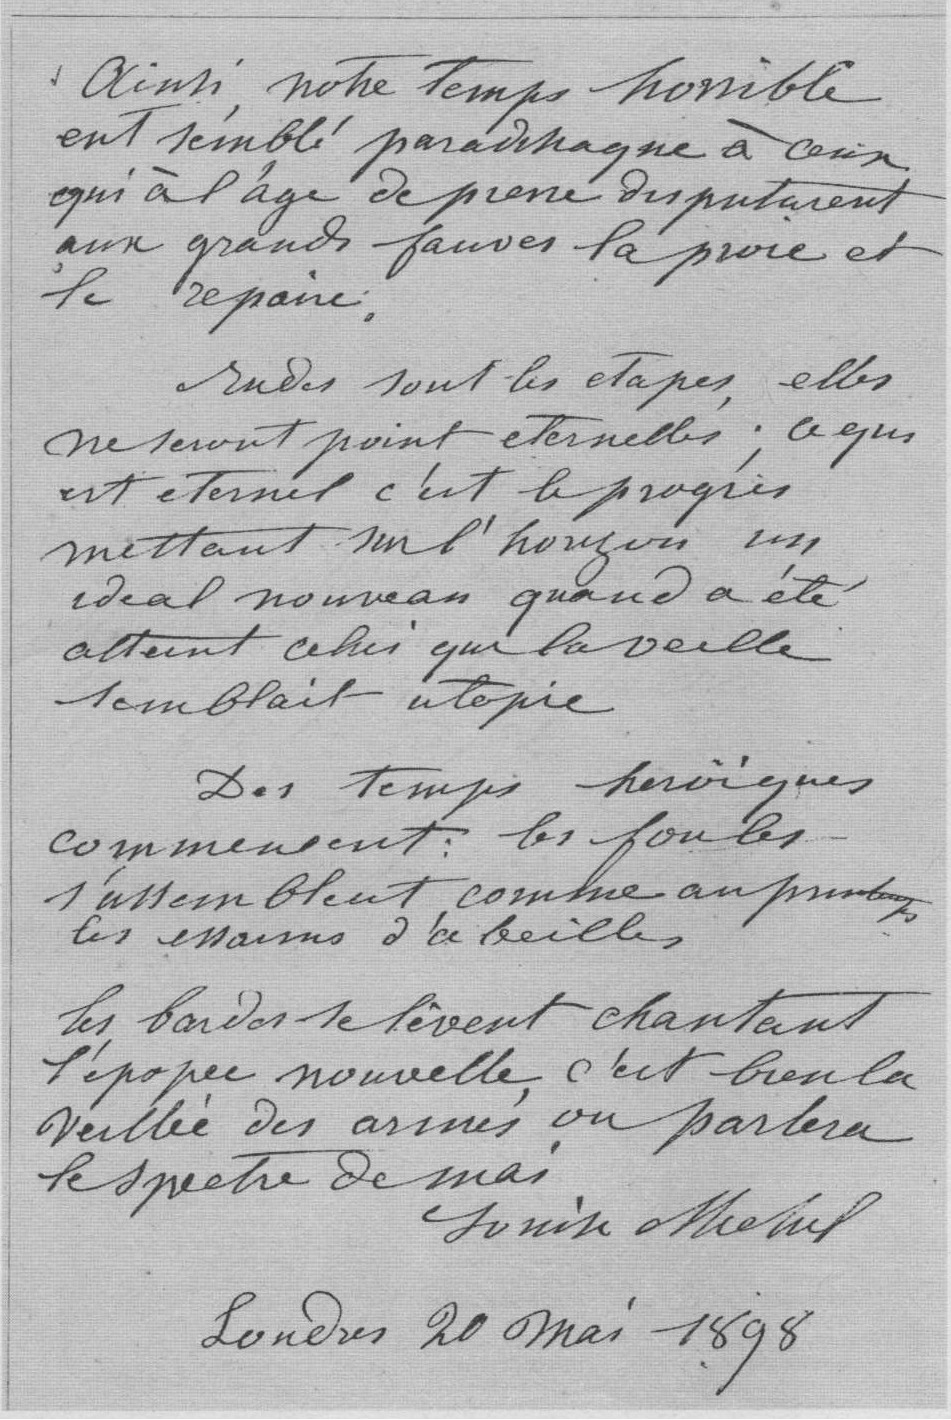 Manuscrit de Louise Michel, Londres 20 mai 1898 (source : Gavroche N° 141-142)